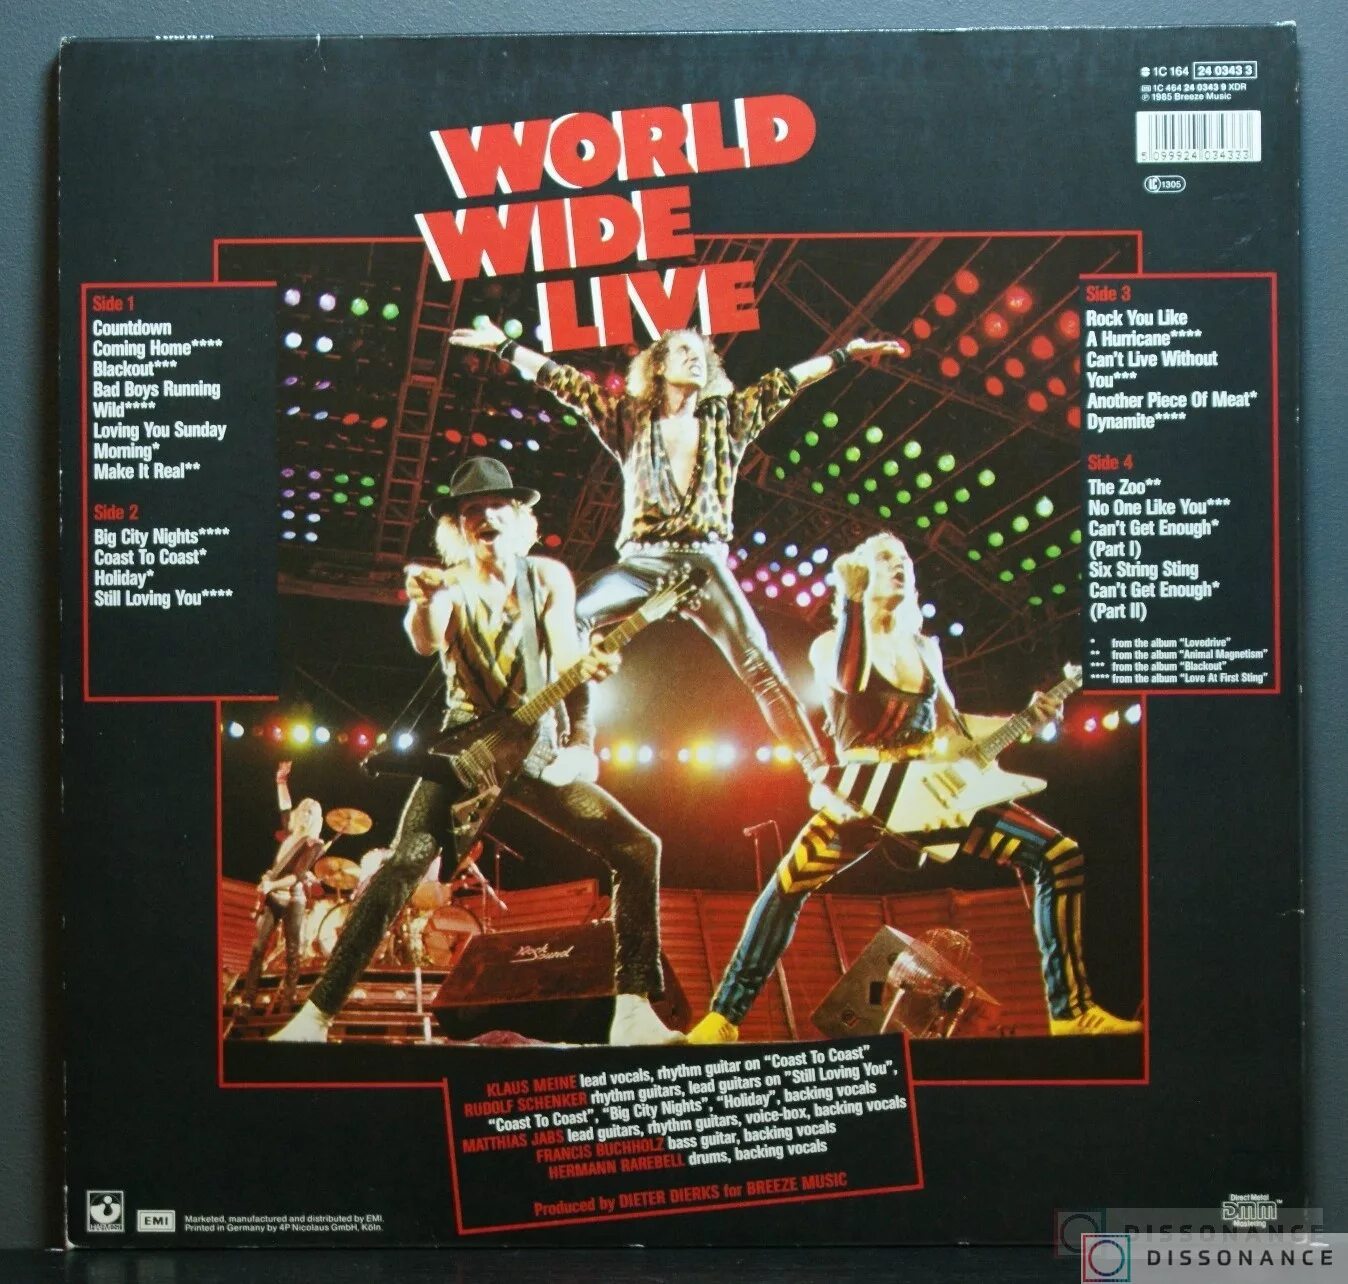 Scorpions World wide Live 1985. Скорпионс виниловые пластинки обложки. Виниловая пластинка Scorpions. Scorpions World wide Live 1985 обложка.